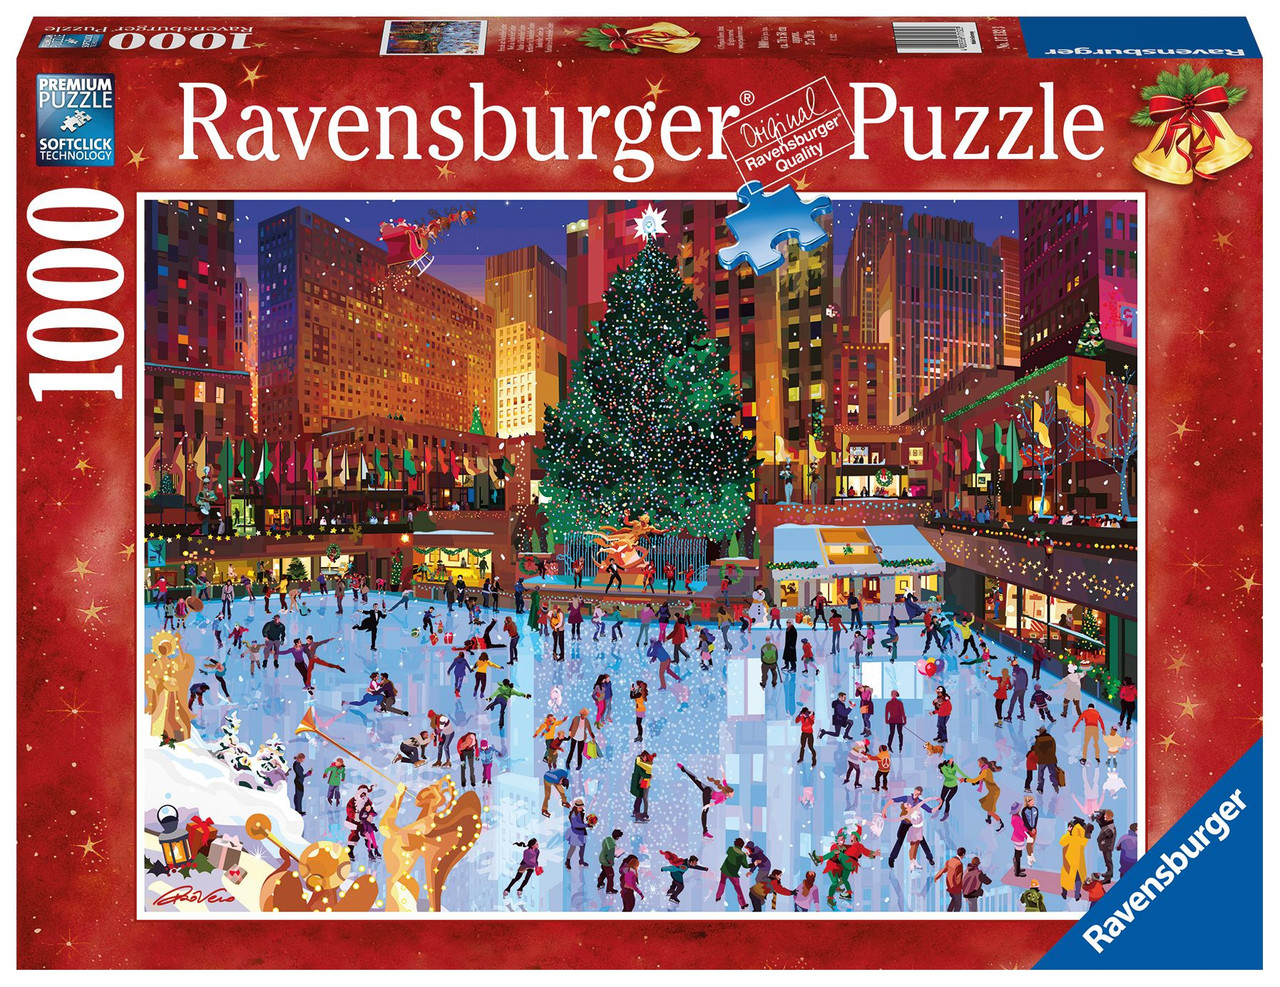 Ravensburger Rockefeller Center Joy 1000 Piece Puzzle